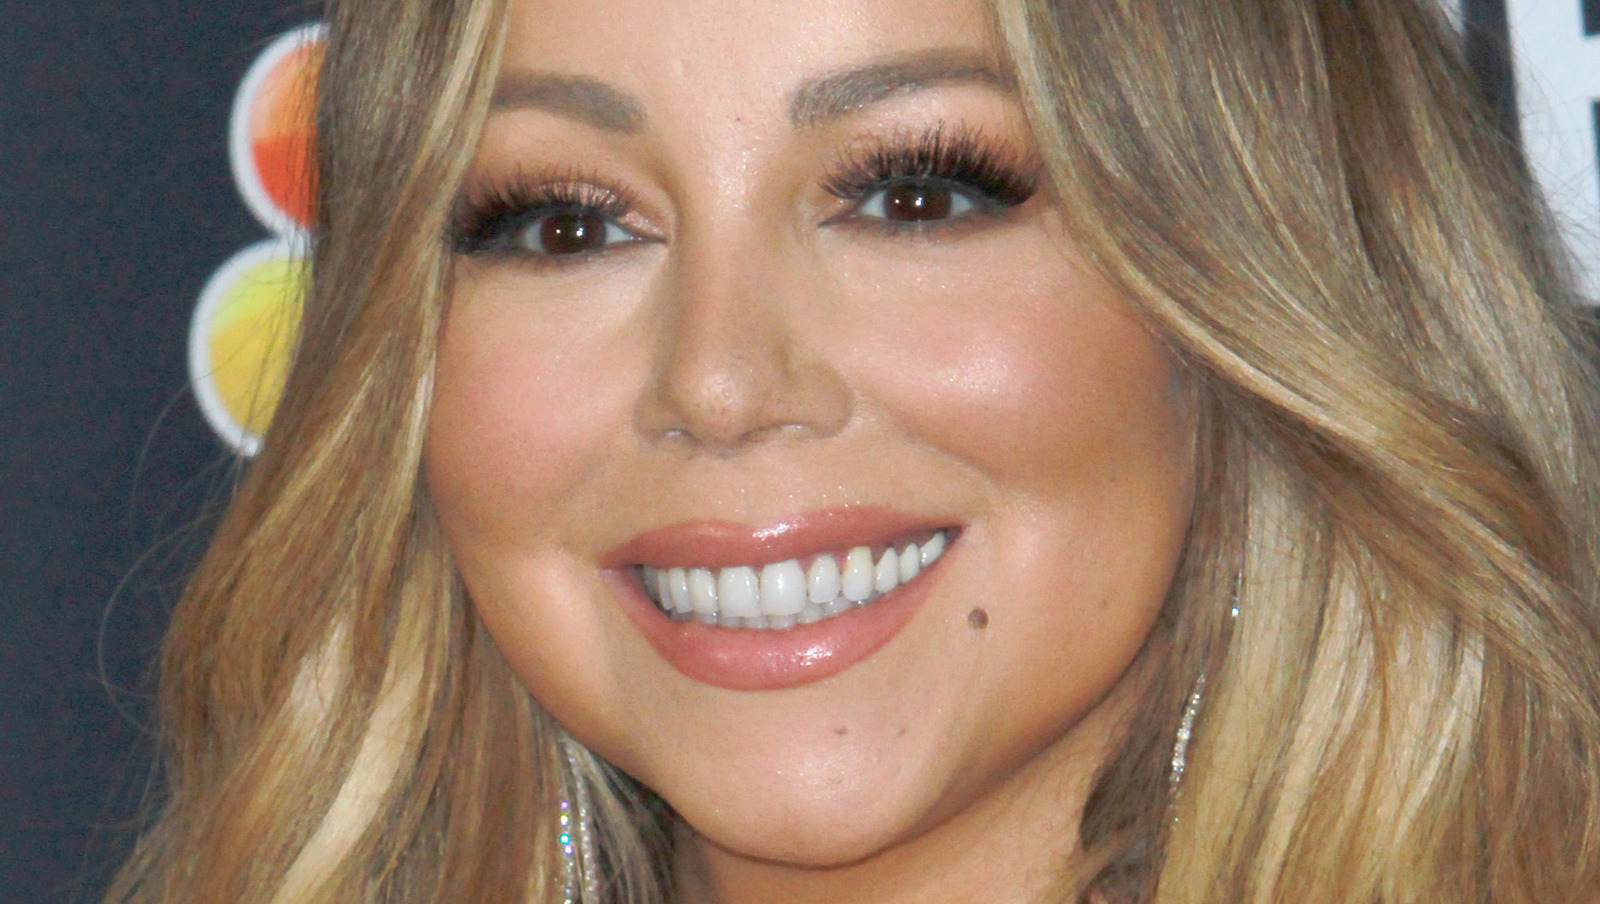 The most awkward celeb wardrobe malfunctions – from Mariah Carey's